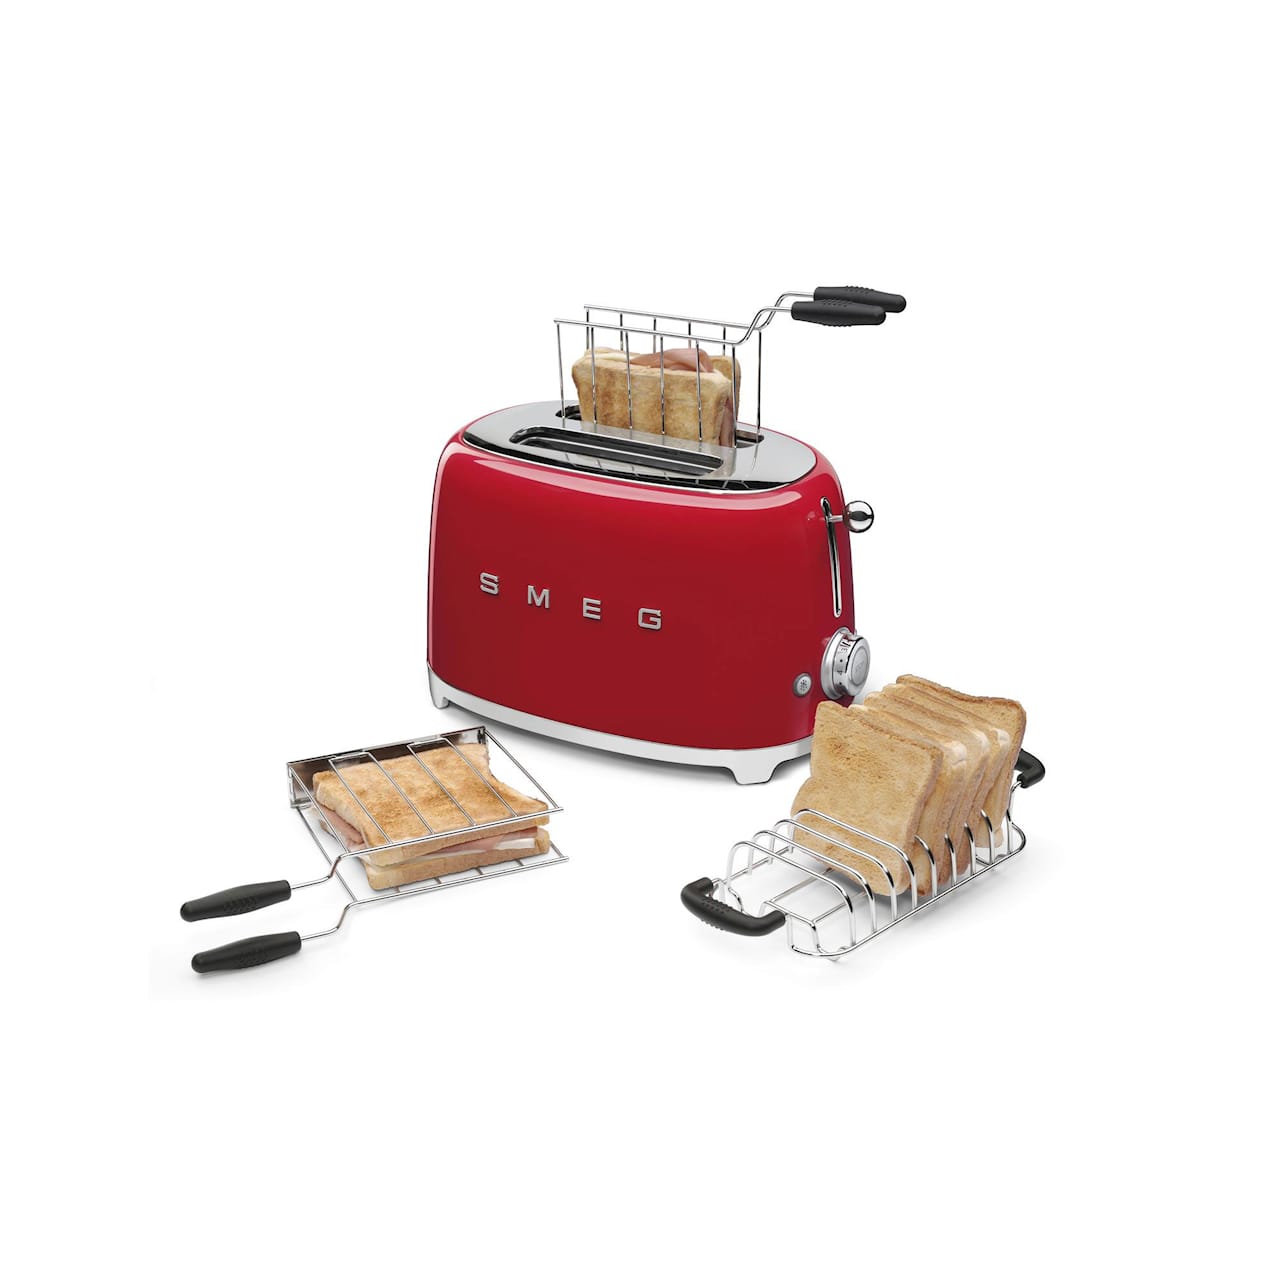 Smeg Toaster 2 Slices Grid